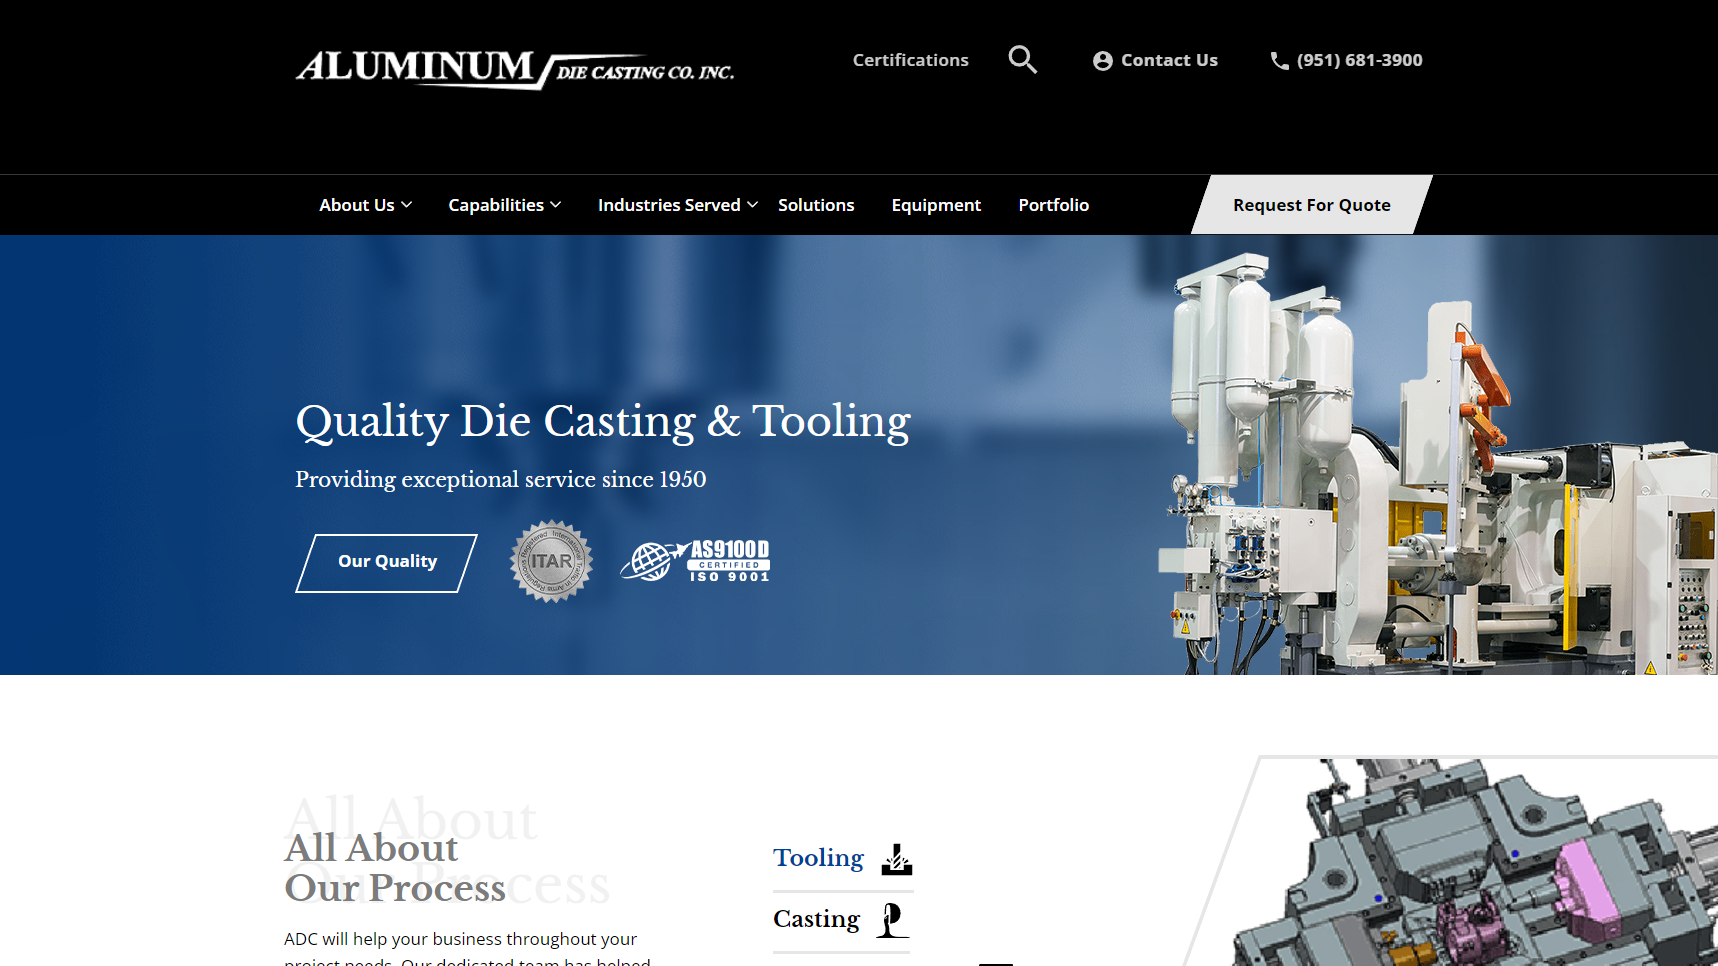 American Die Casting Company - Aluminum Die Casting Manufacturer